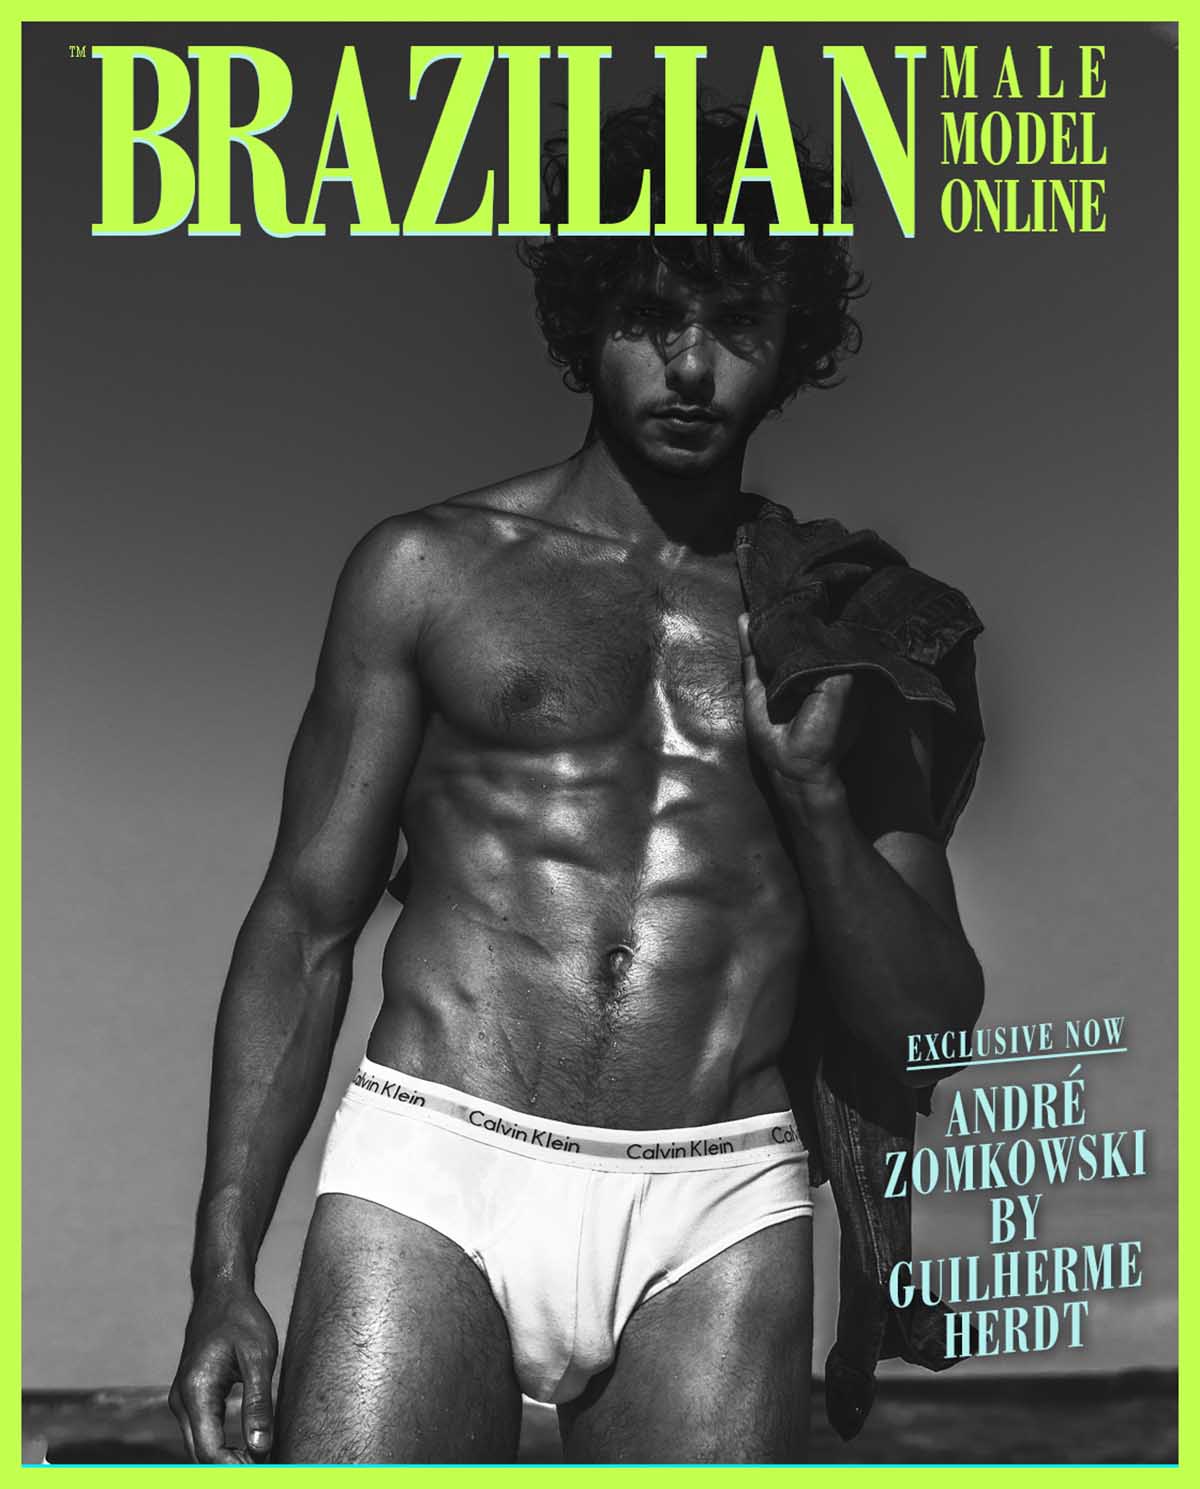 André Zomkowski X Guilherme Herd X Brazilian Male Model X YUP MAGAZINE